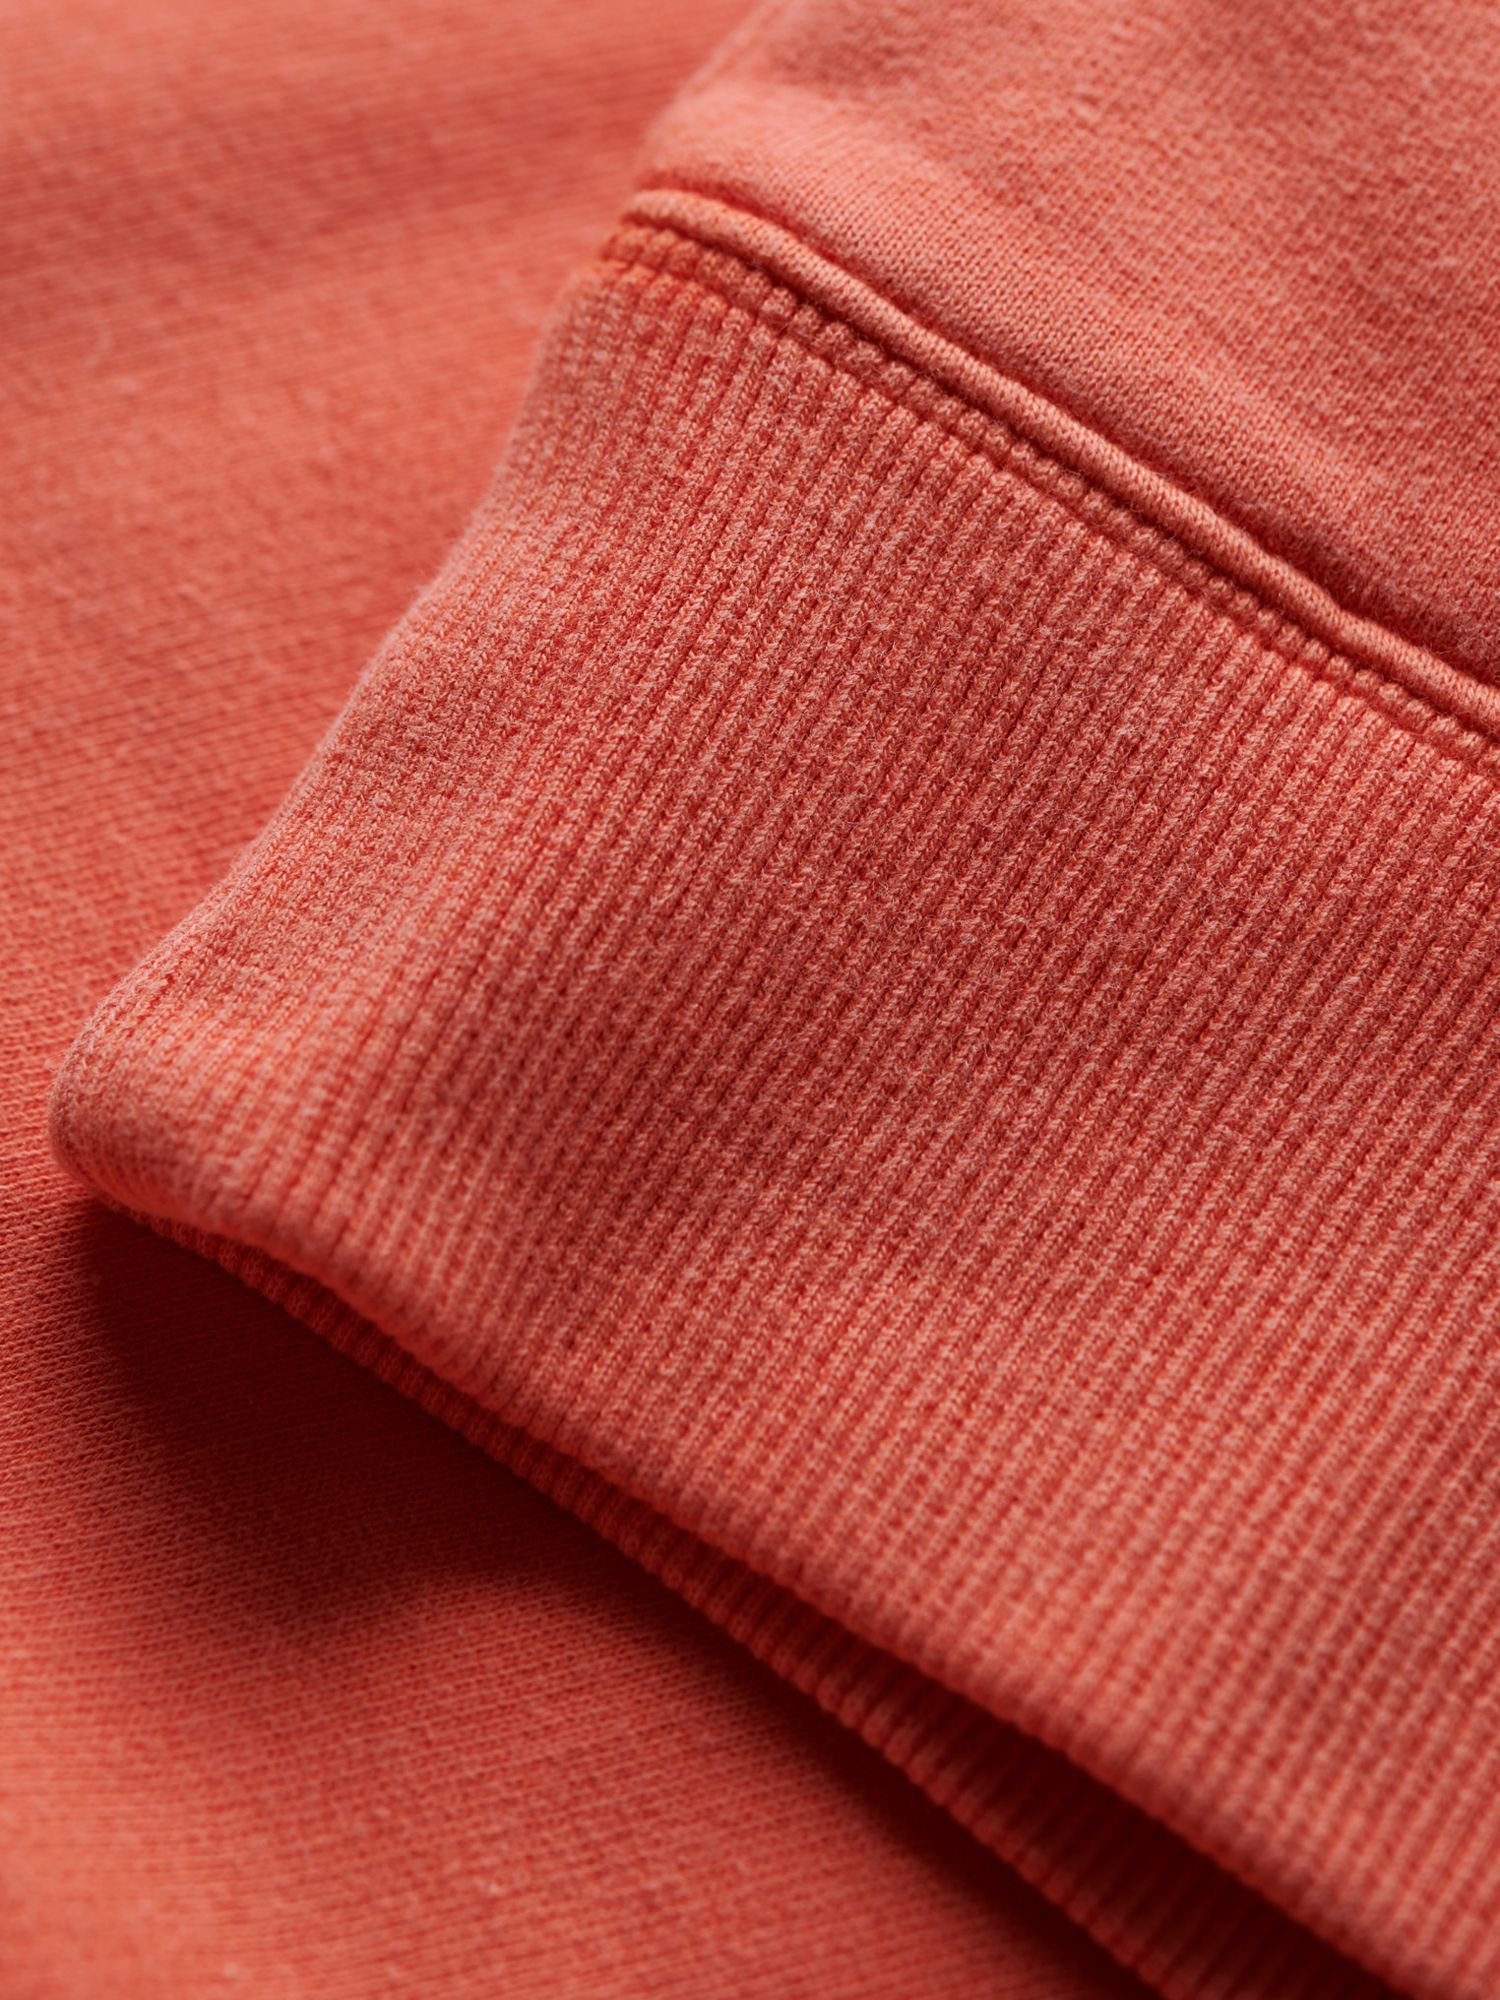 Superdry Vintage washed Cotton Sweatshirt, Havana Orange, L